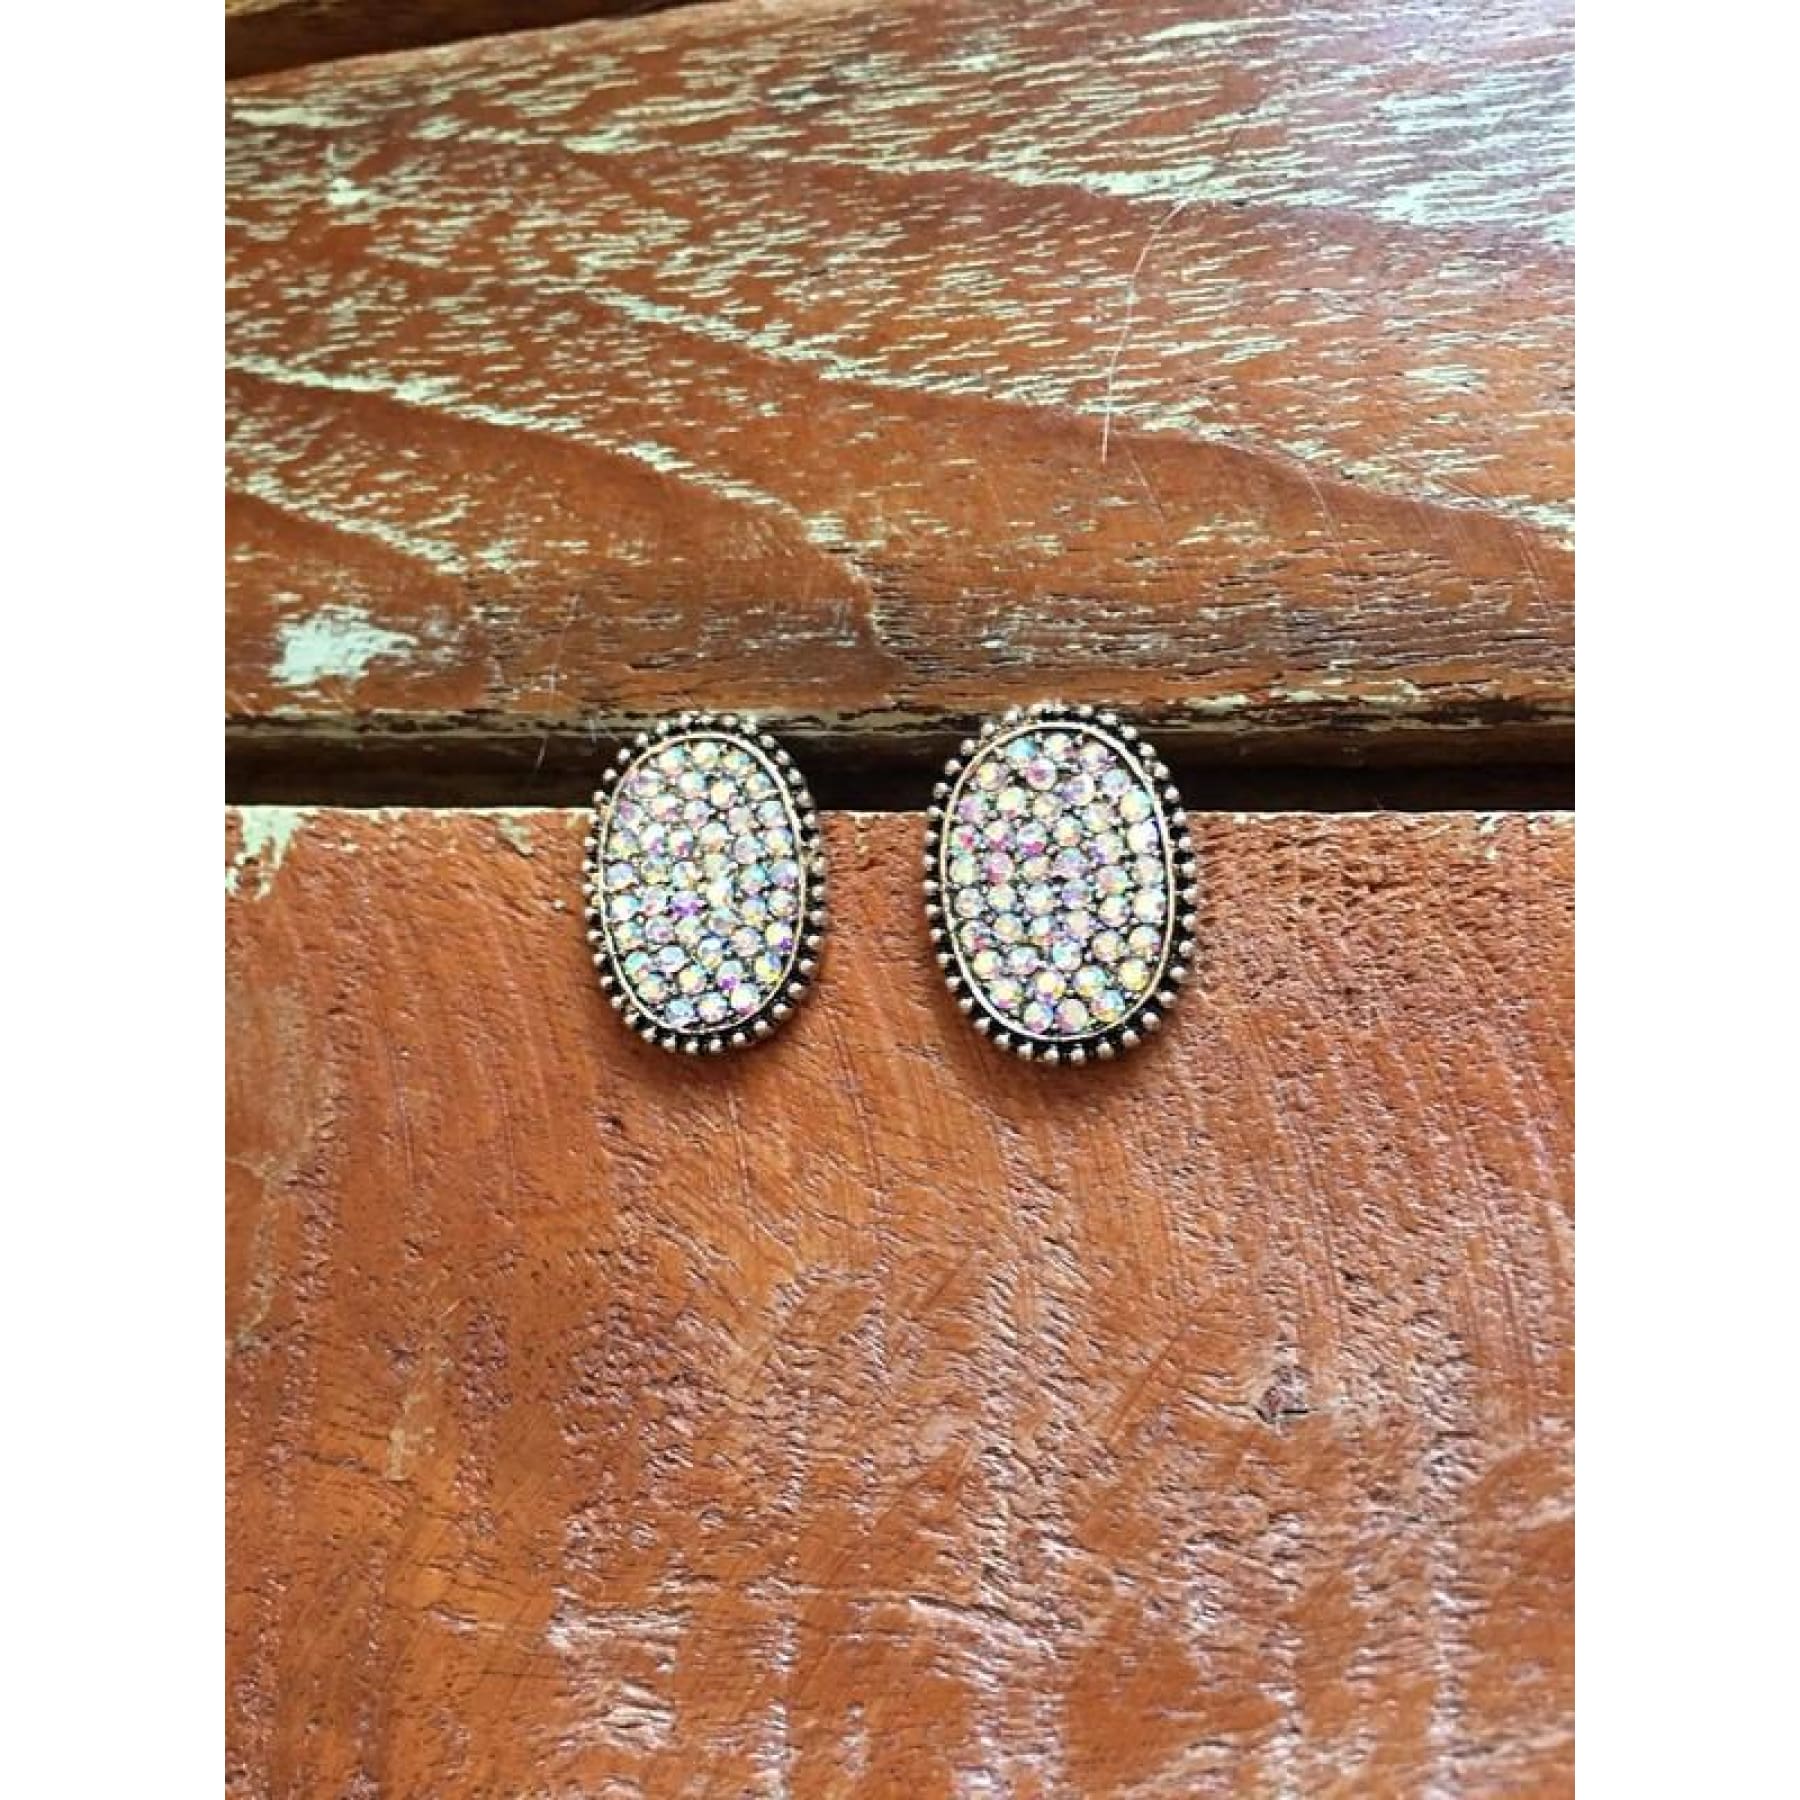 Small Apache Crystal Earrings,Earrings - Dirt Road Divas Boutique